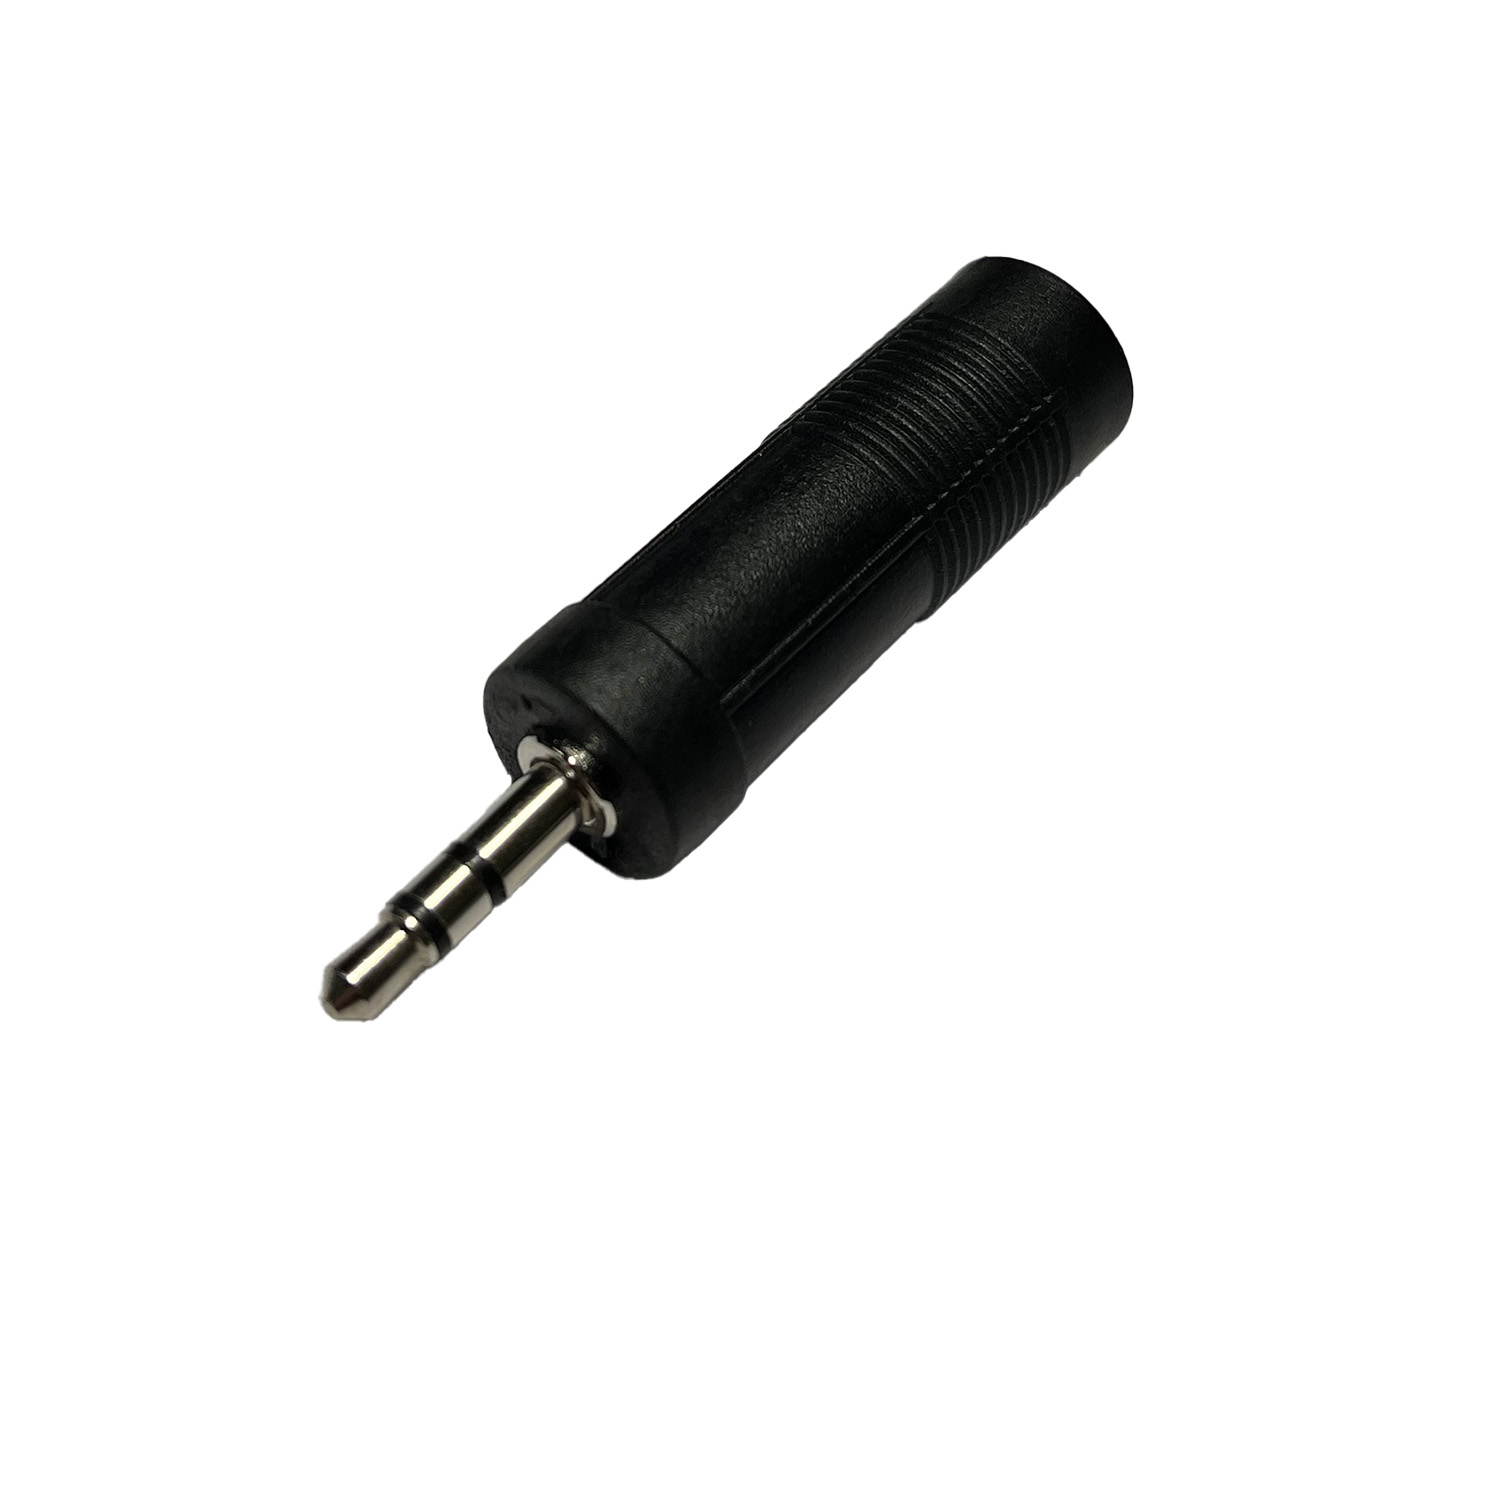 Kopfhörer Adapter Klinke 3,5 mm zu 6,35 mm